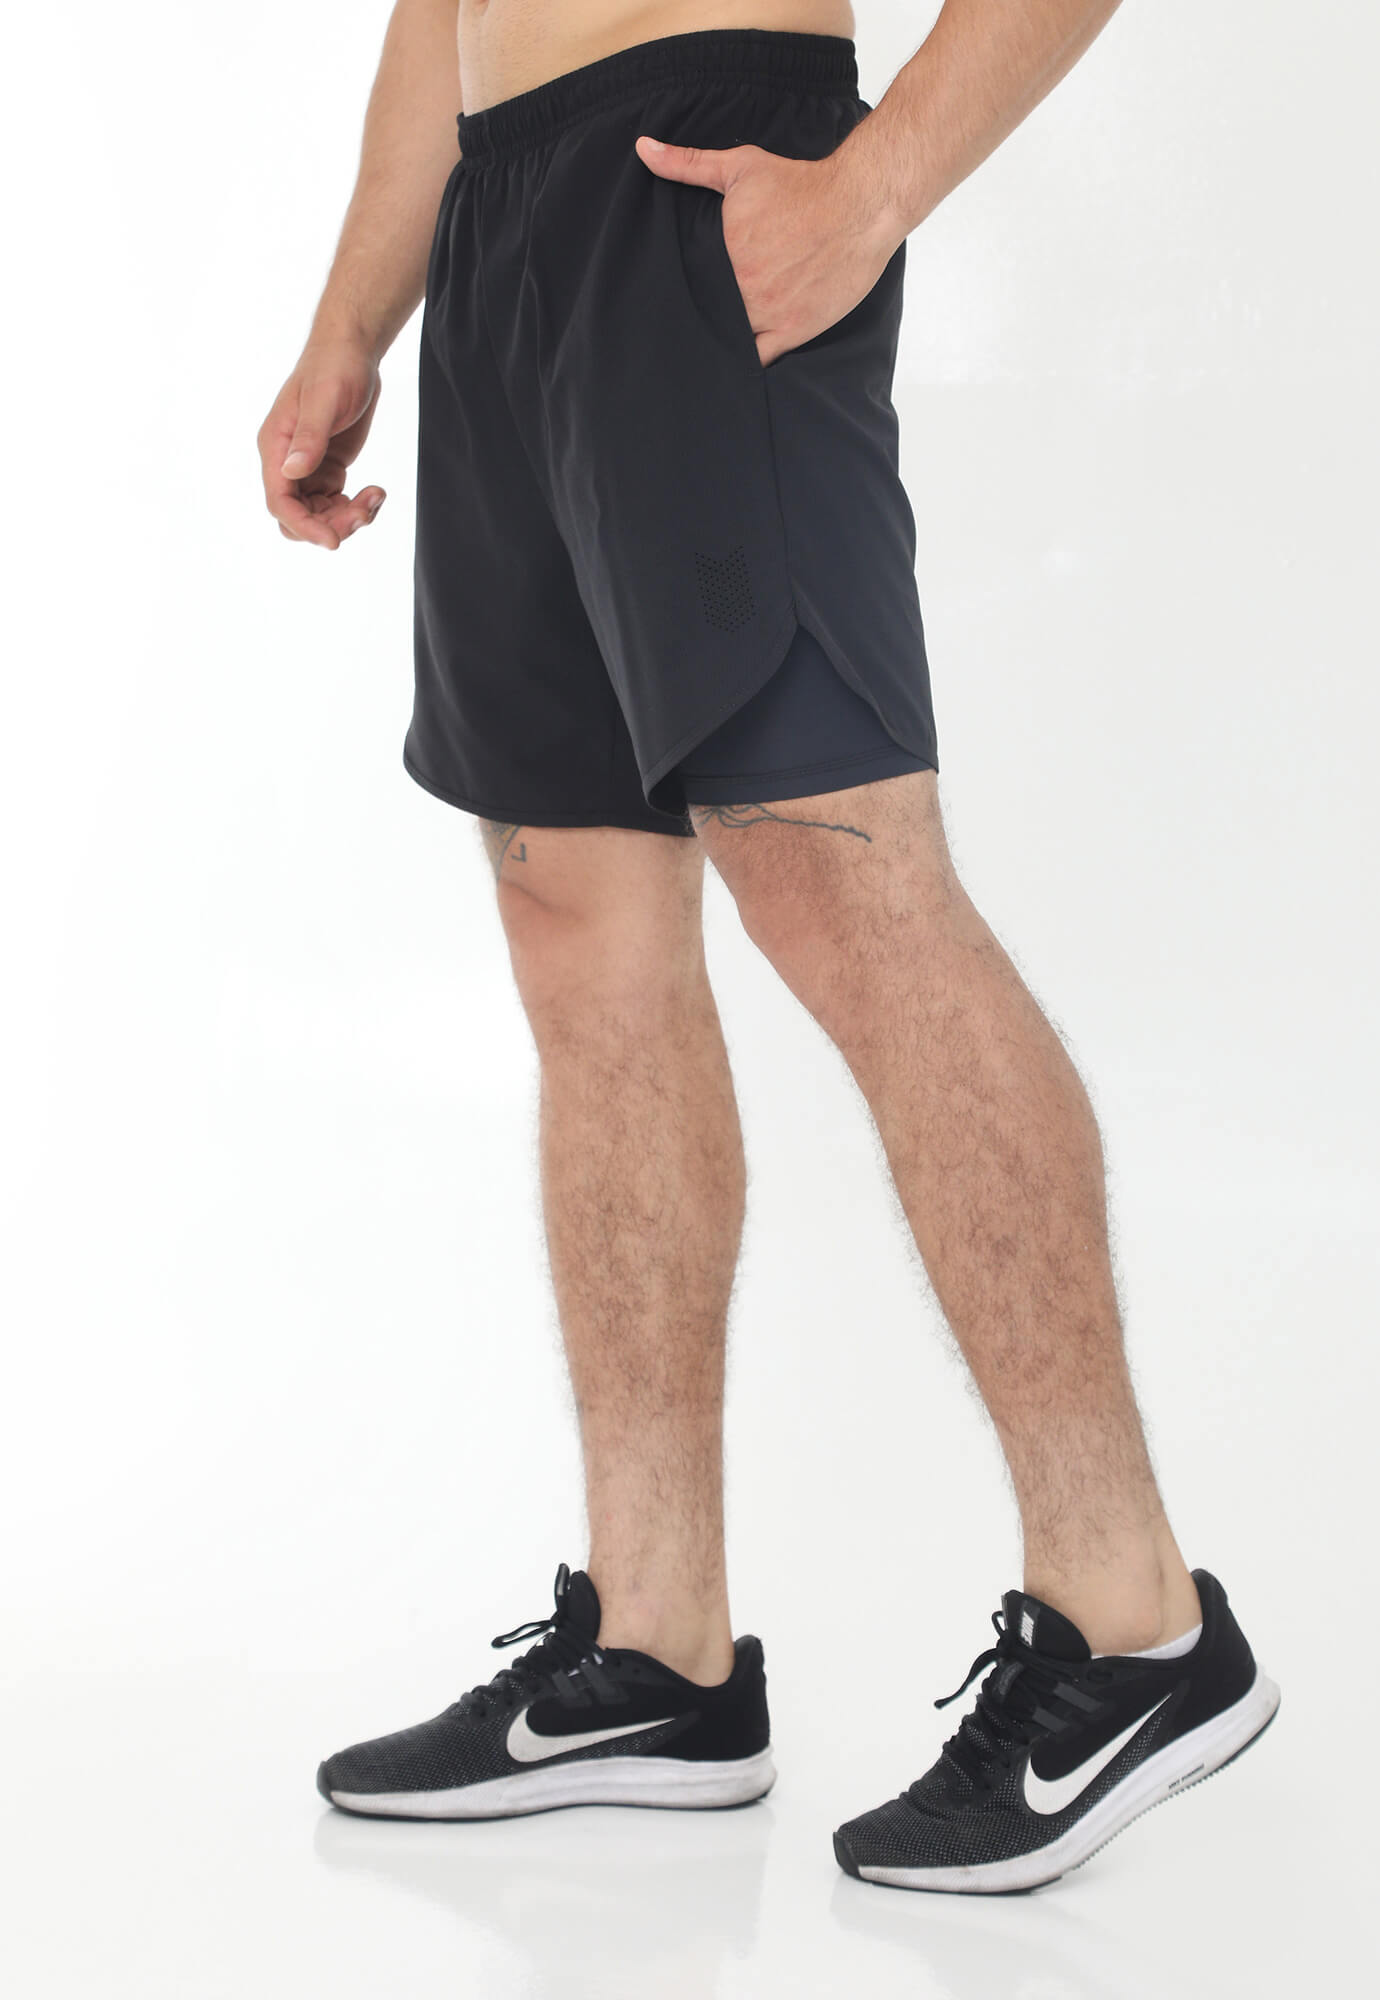 Pantaloneta Deportivo Negra Con Bolsillo Trasero Para Hombre